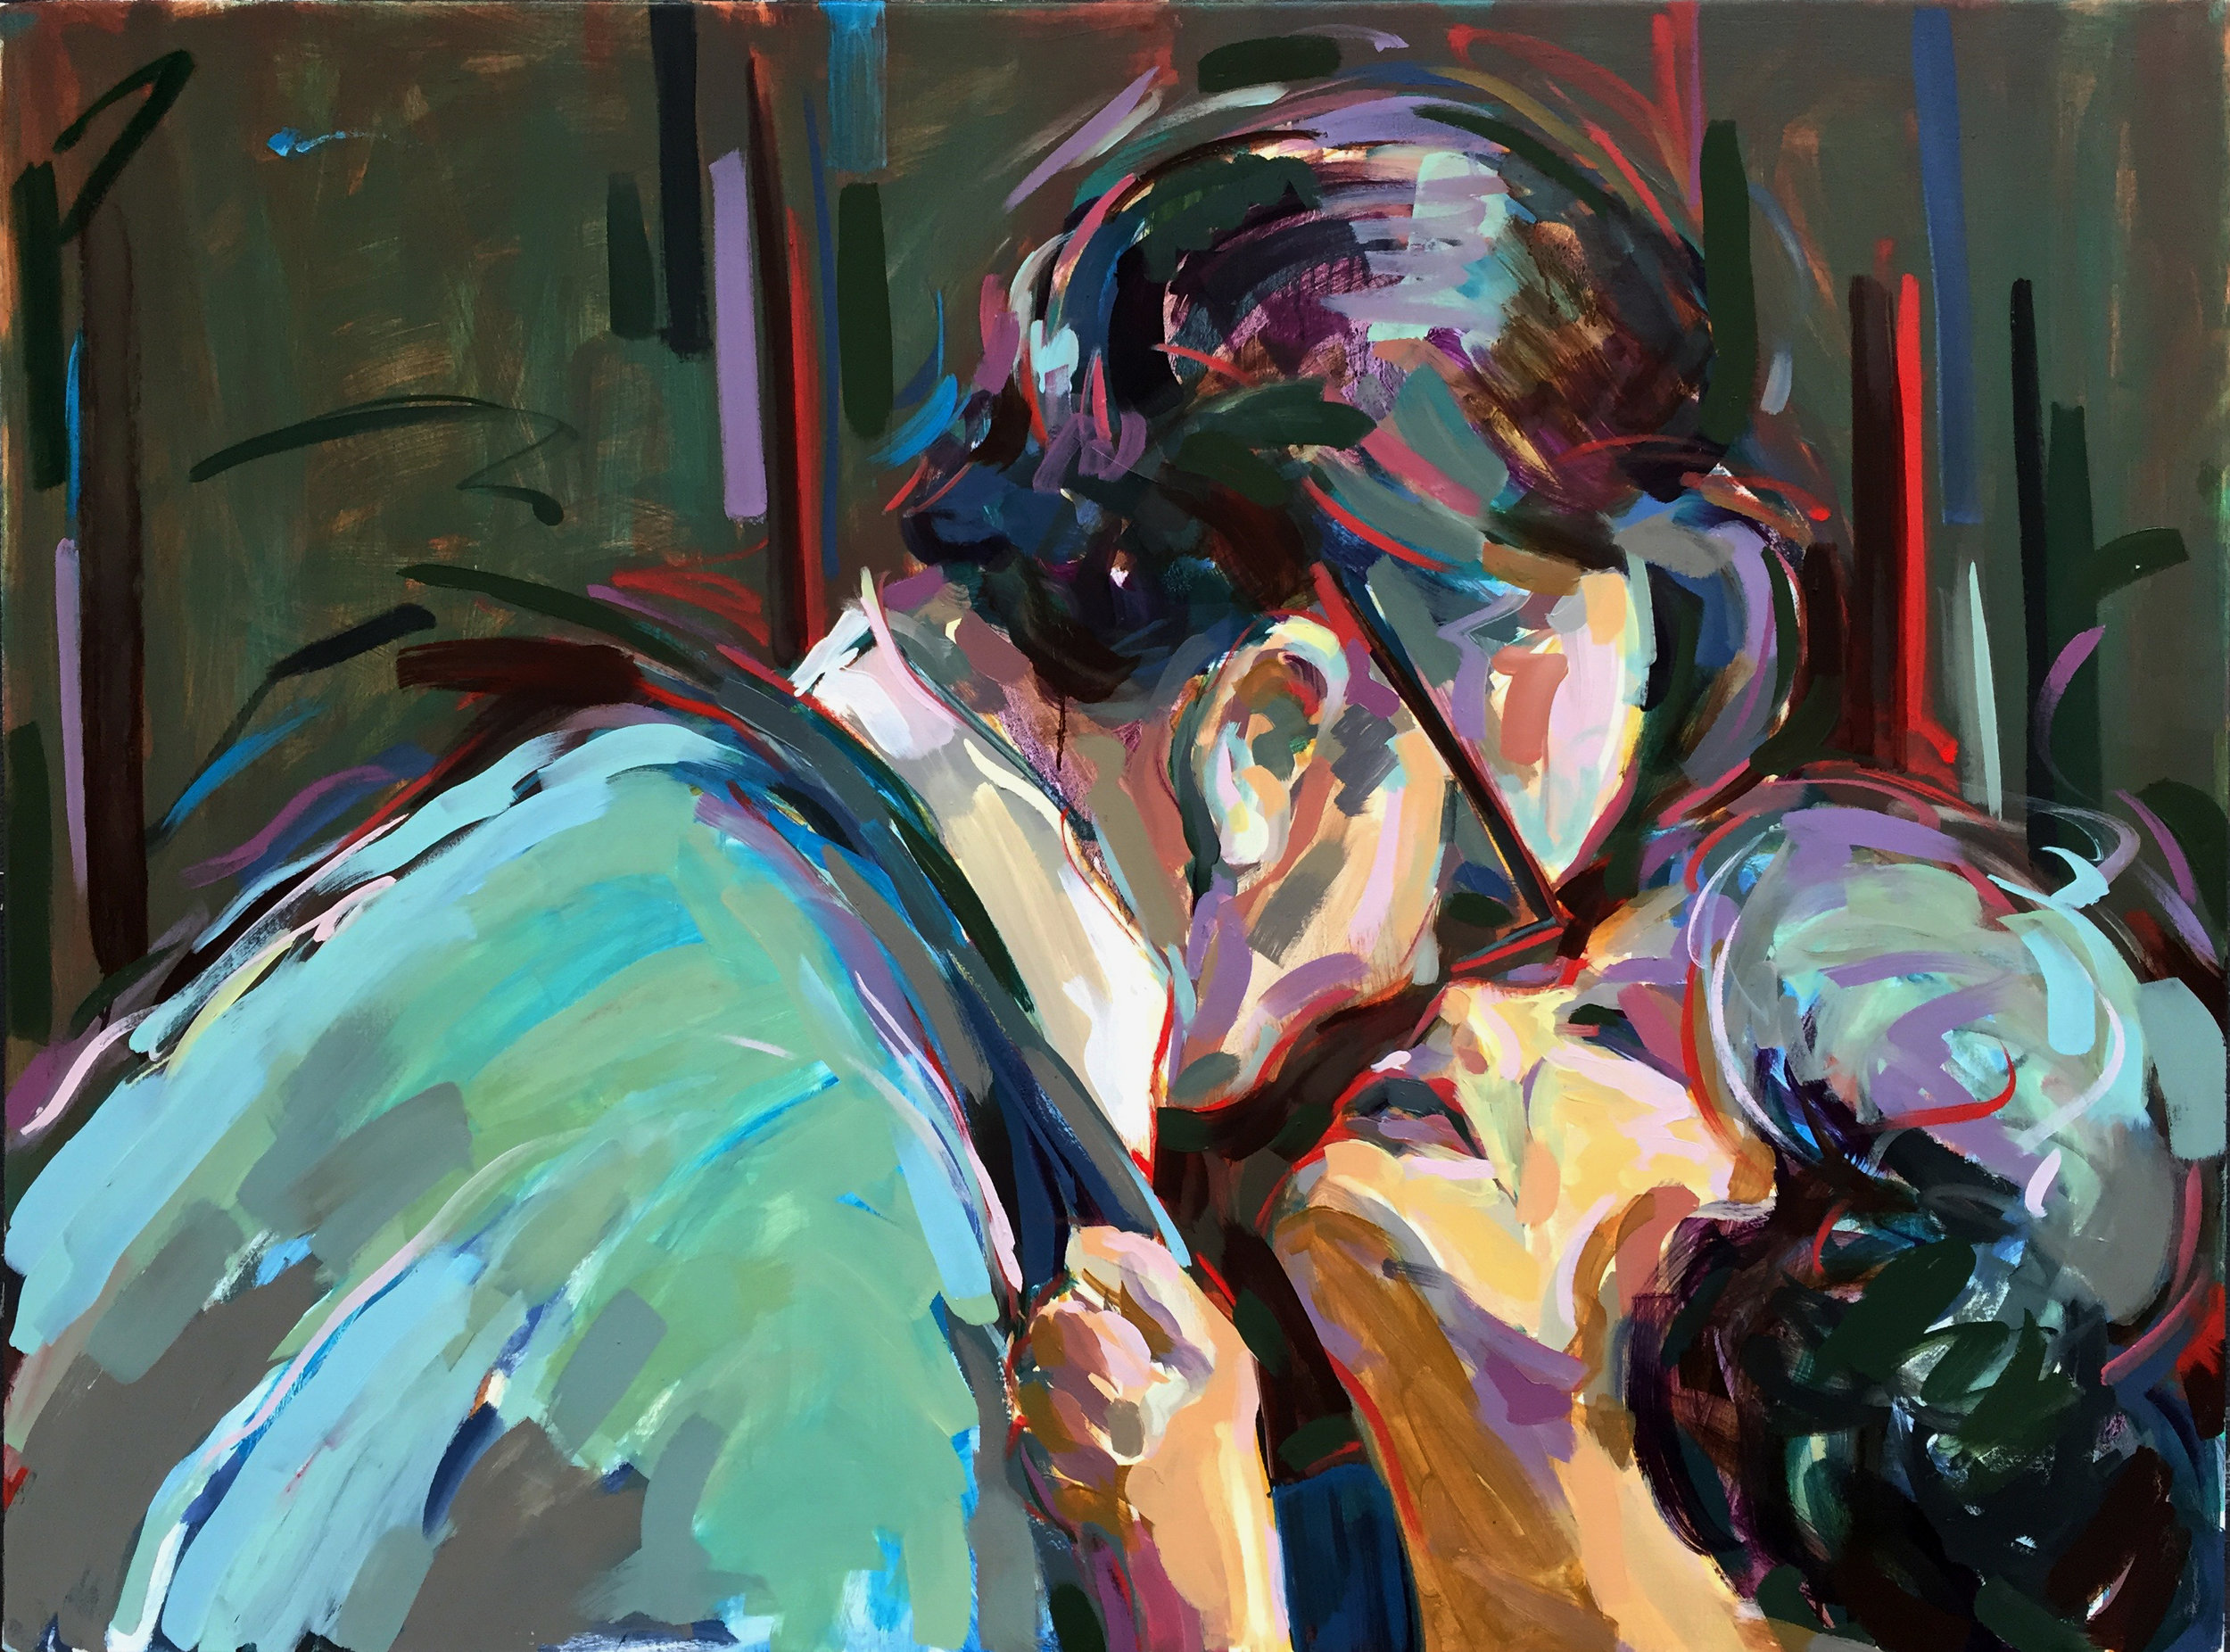   Big Sloppy Kiss  2017 Oil on canvas 30" x 40" 